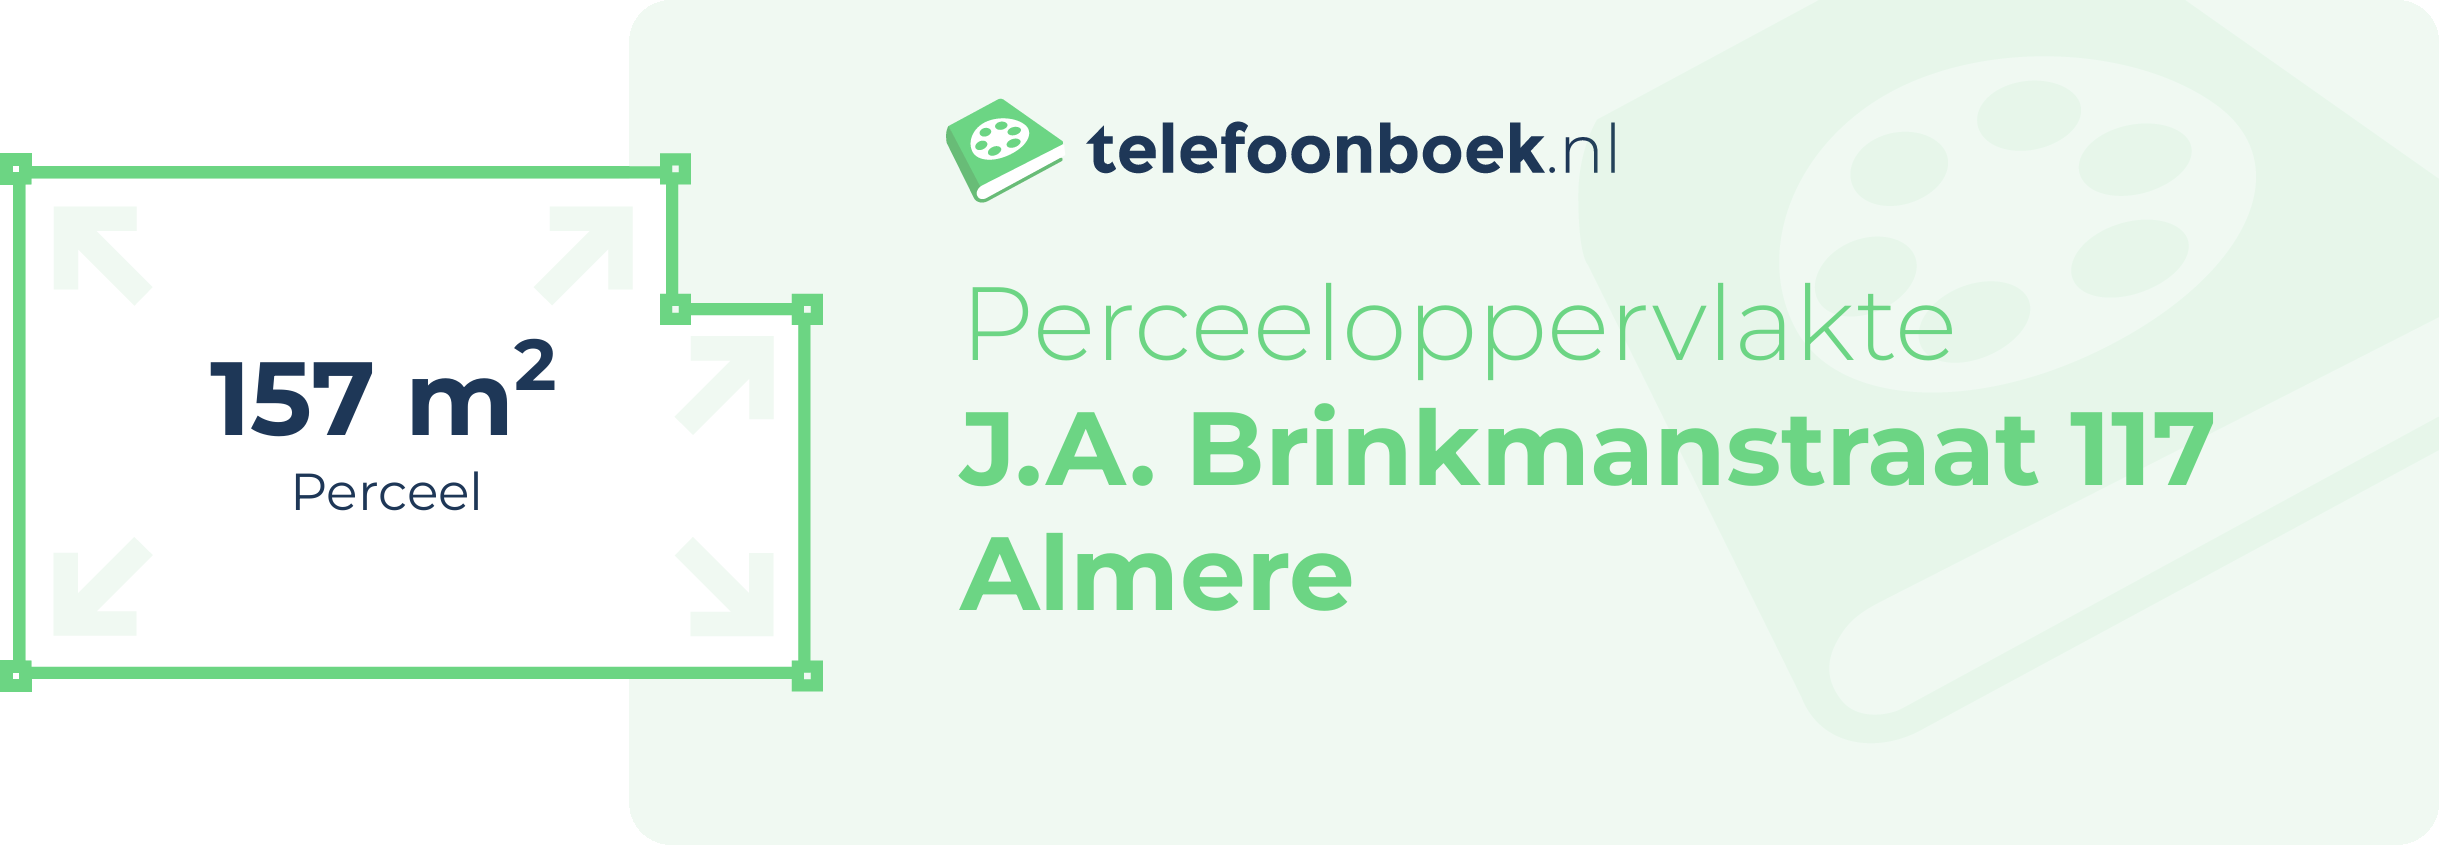 Perceeloppervlakte J.A. Brinkmanstraat 117 Almere